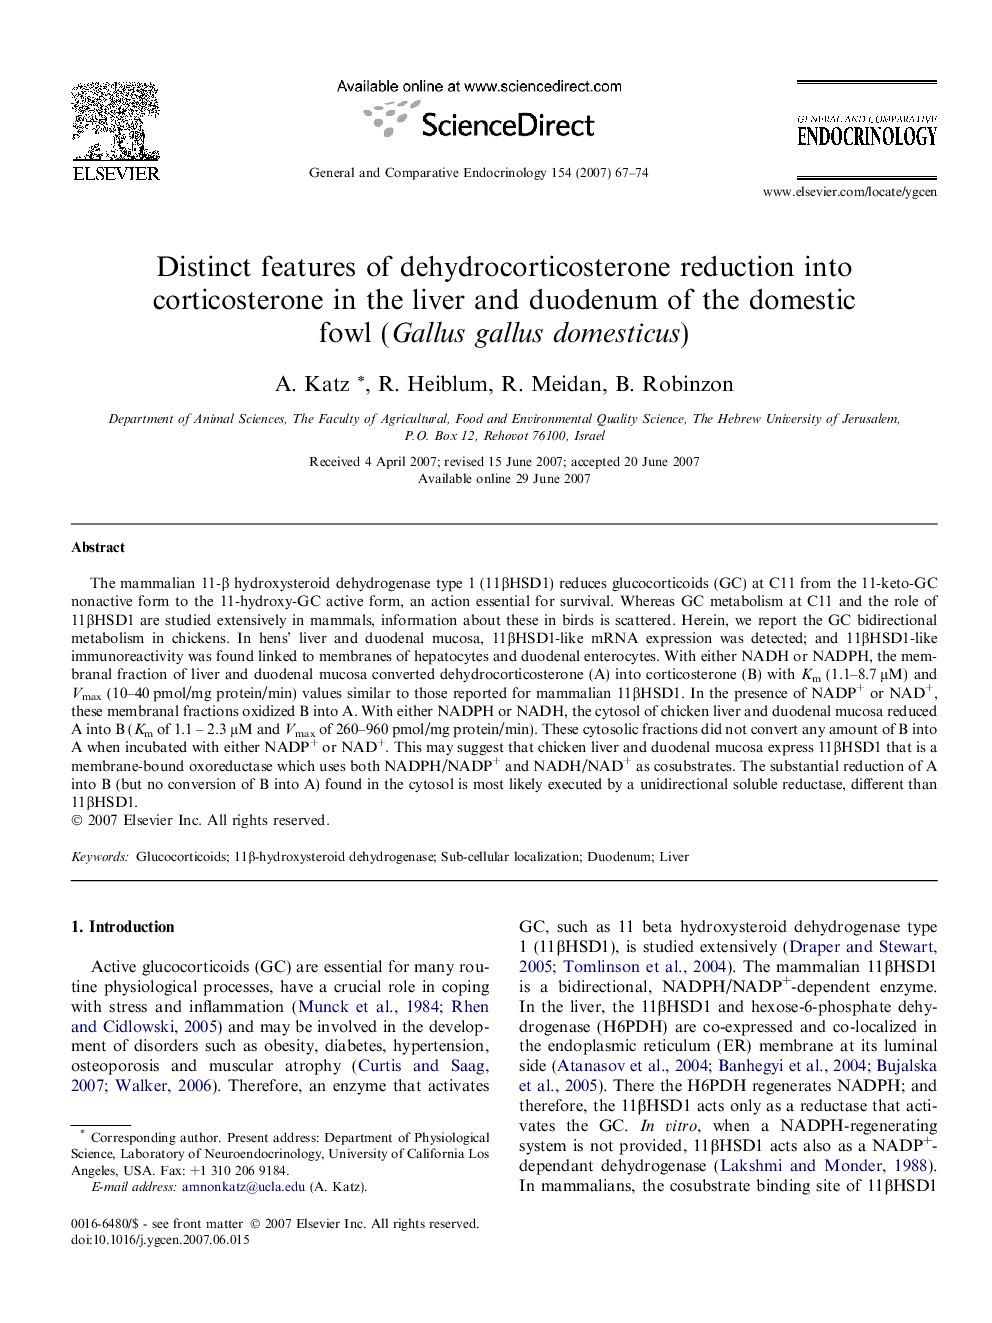 Distinct features of dehydrocorticosterone reduction into corticosterone in the liver and duodenum of the domestic fowl (Gallus gallus domesticus)